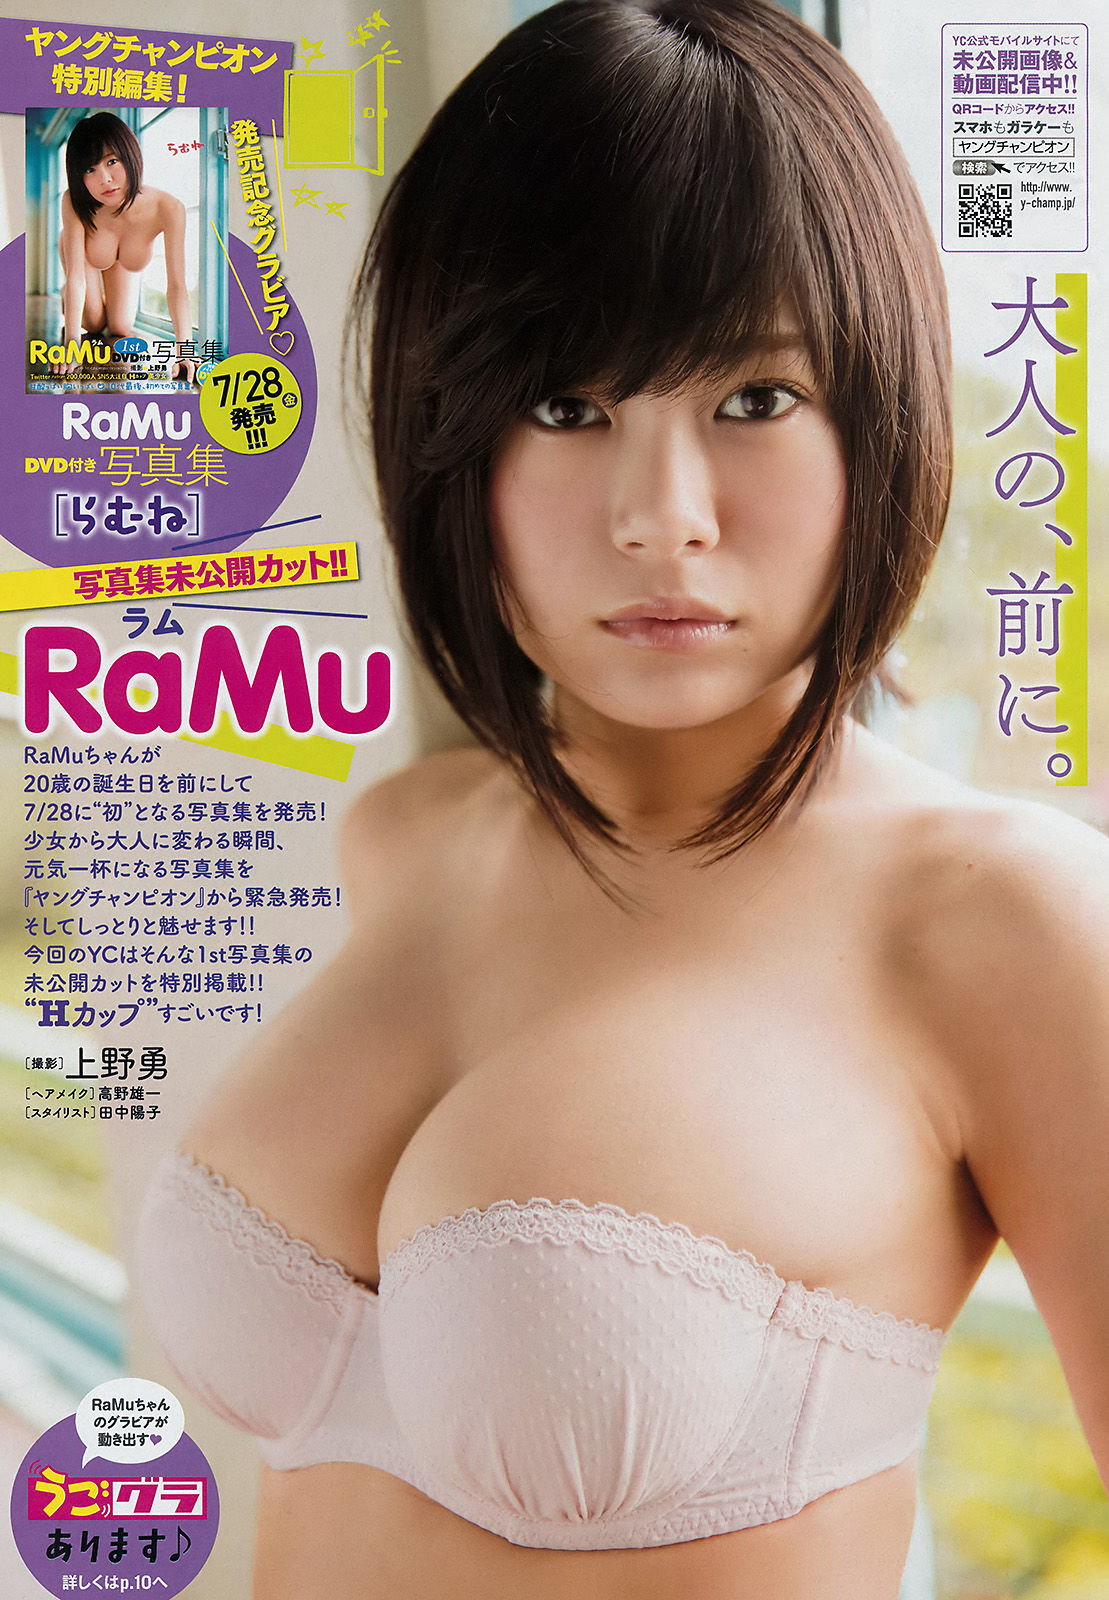 [Young Champion]大胸日本萌妹子爆乳:RaMu无圣光私房照片在线浏览(12P)